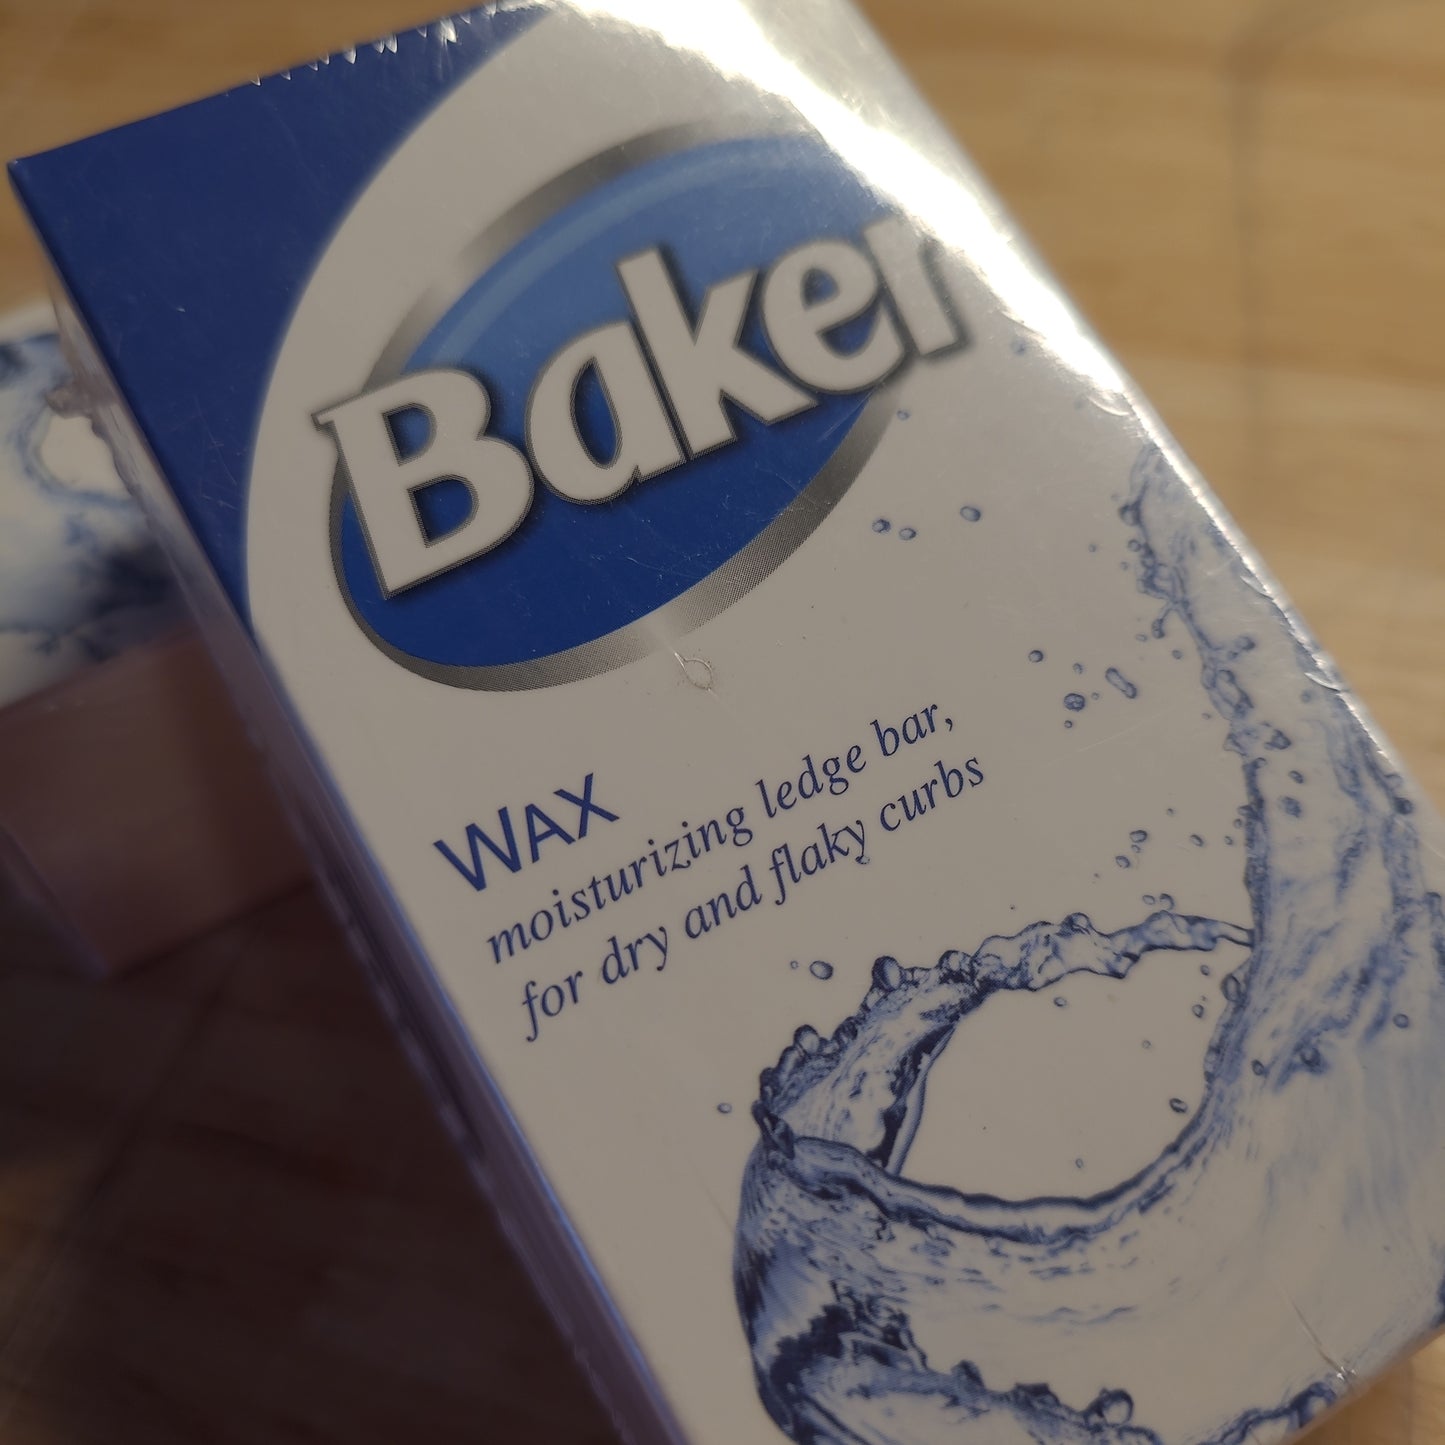 Baker - Curb Wax